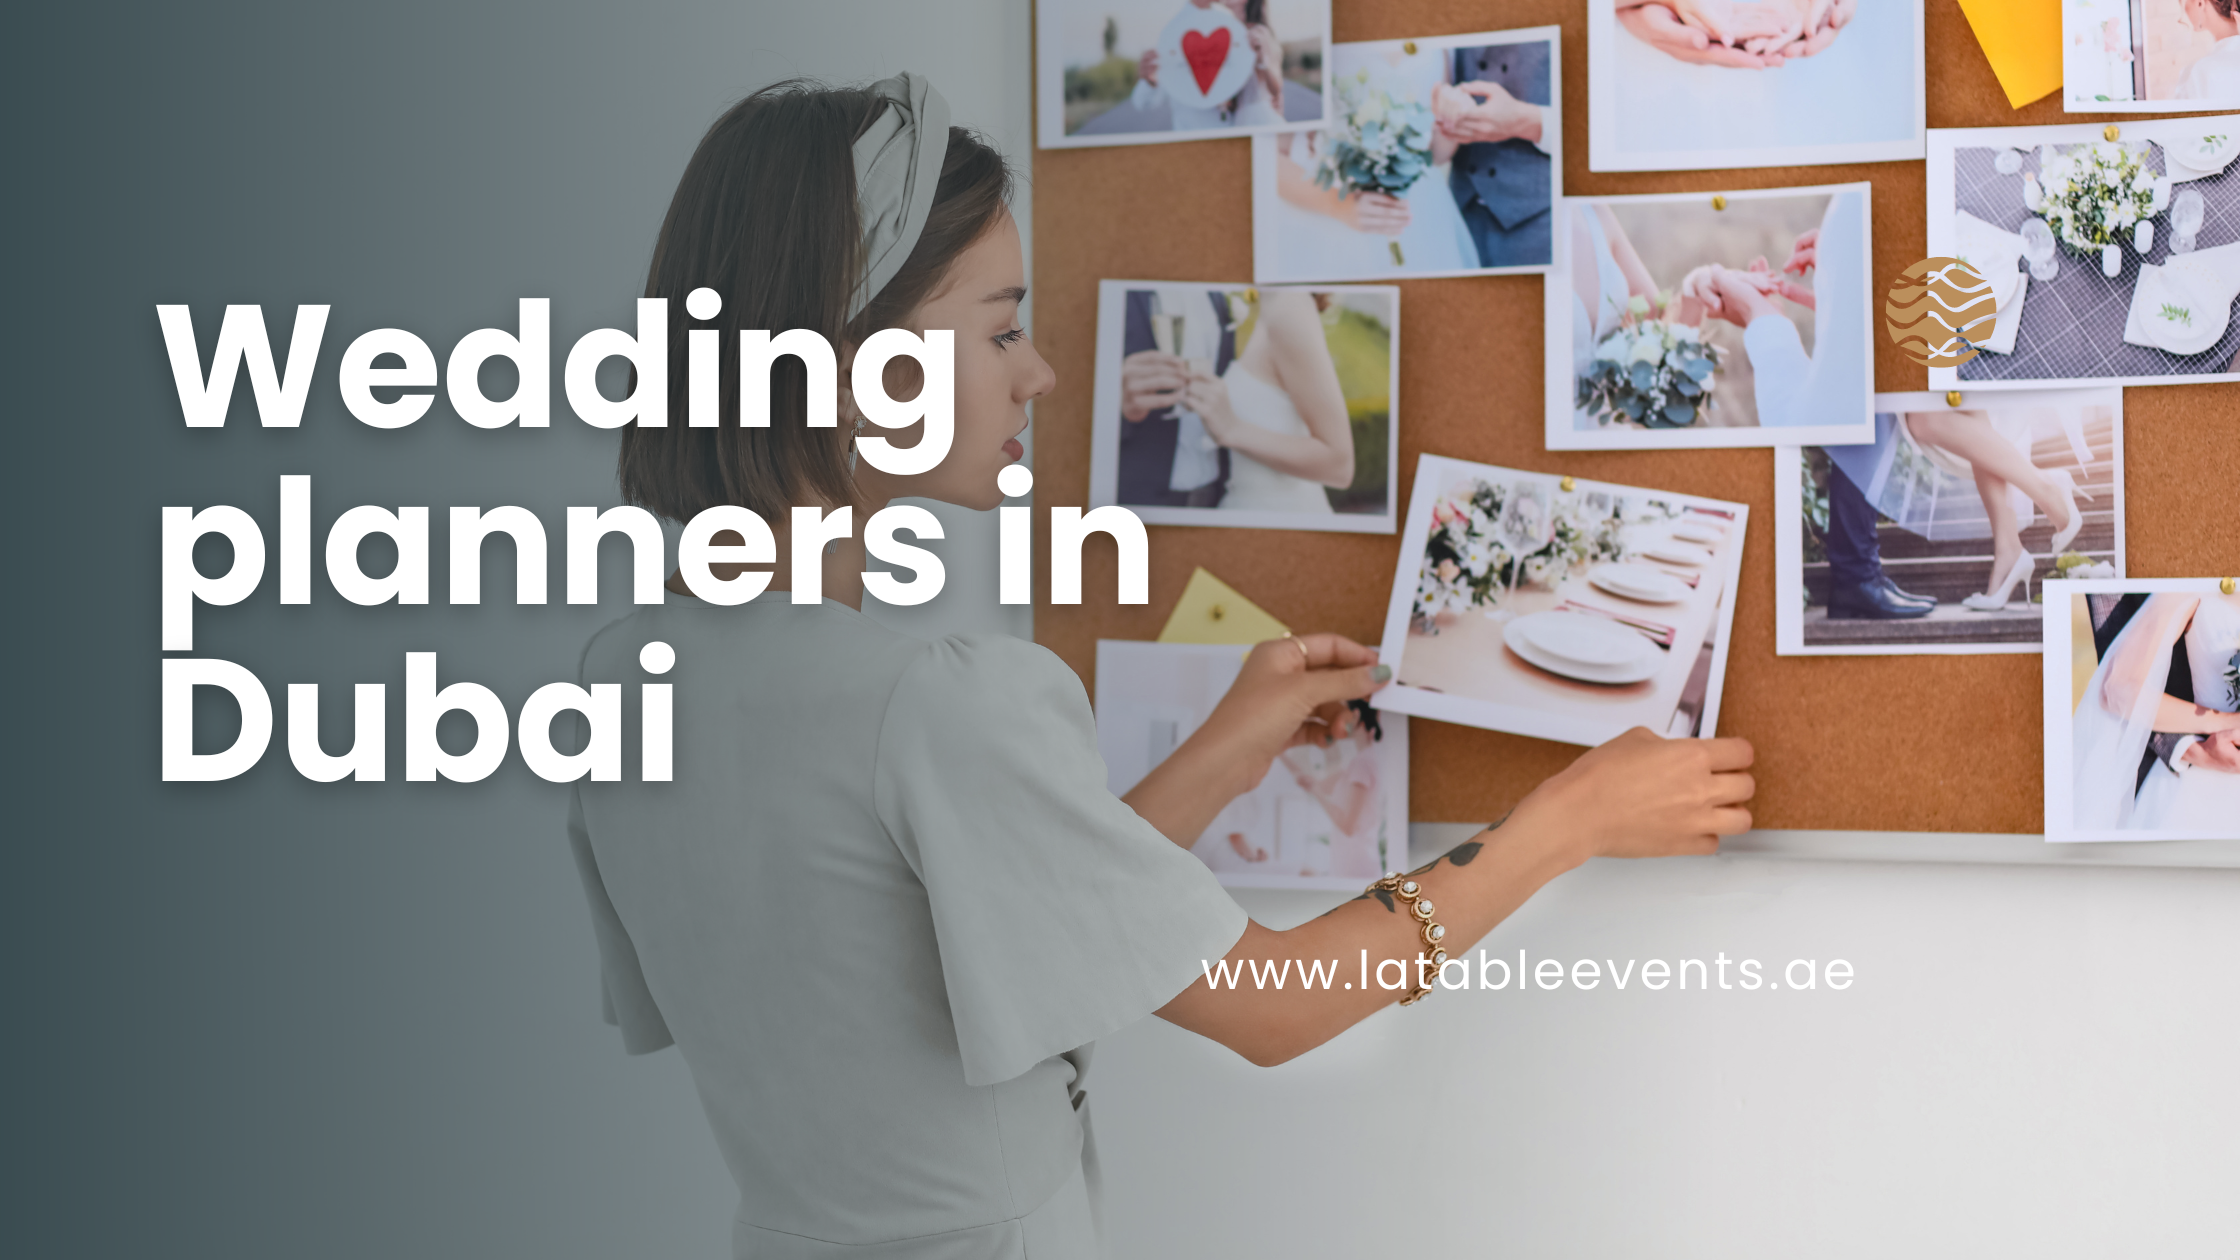 Wedding planners in Dubai